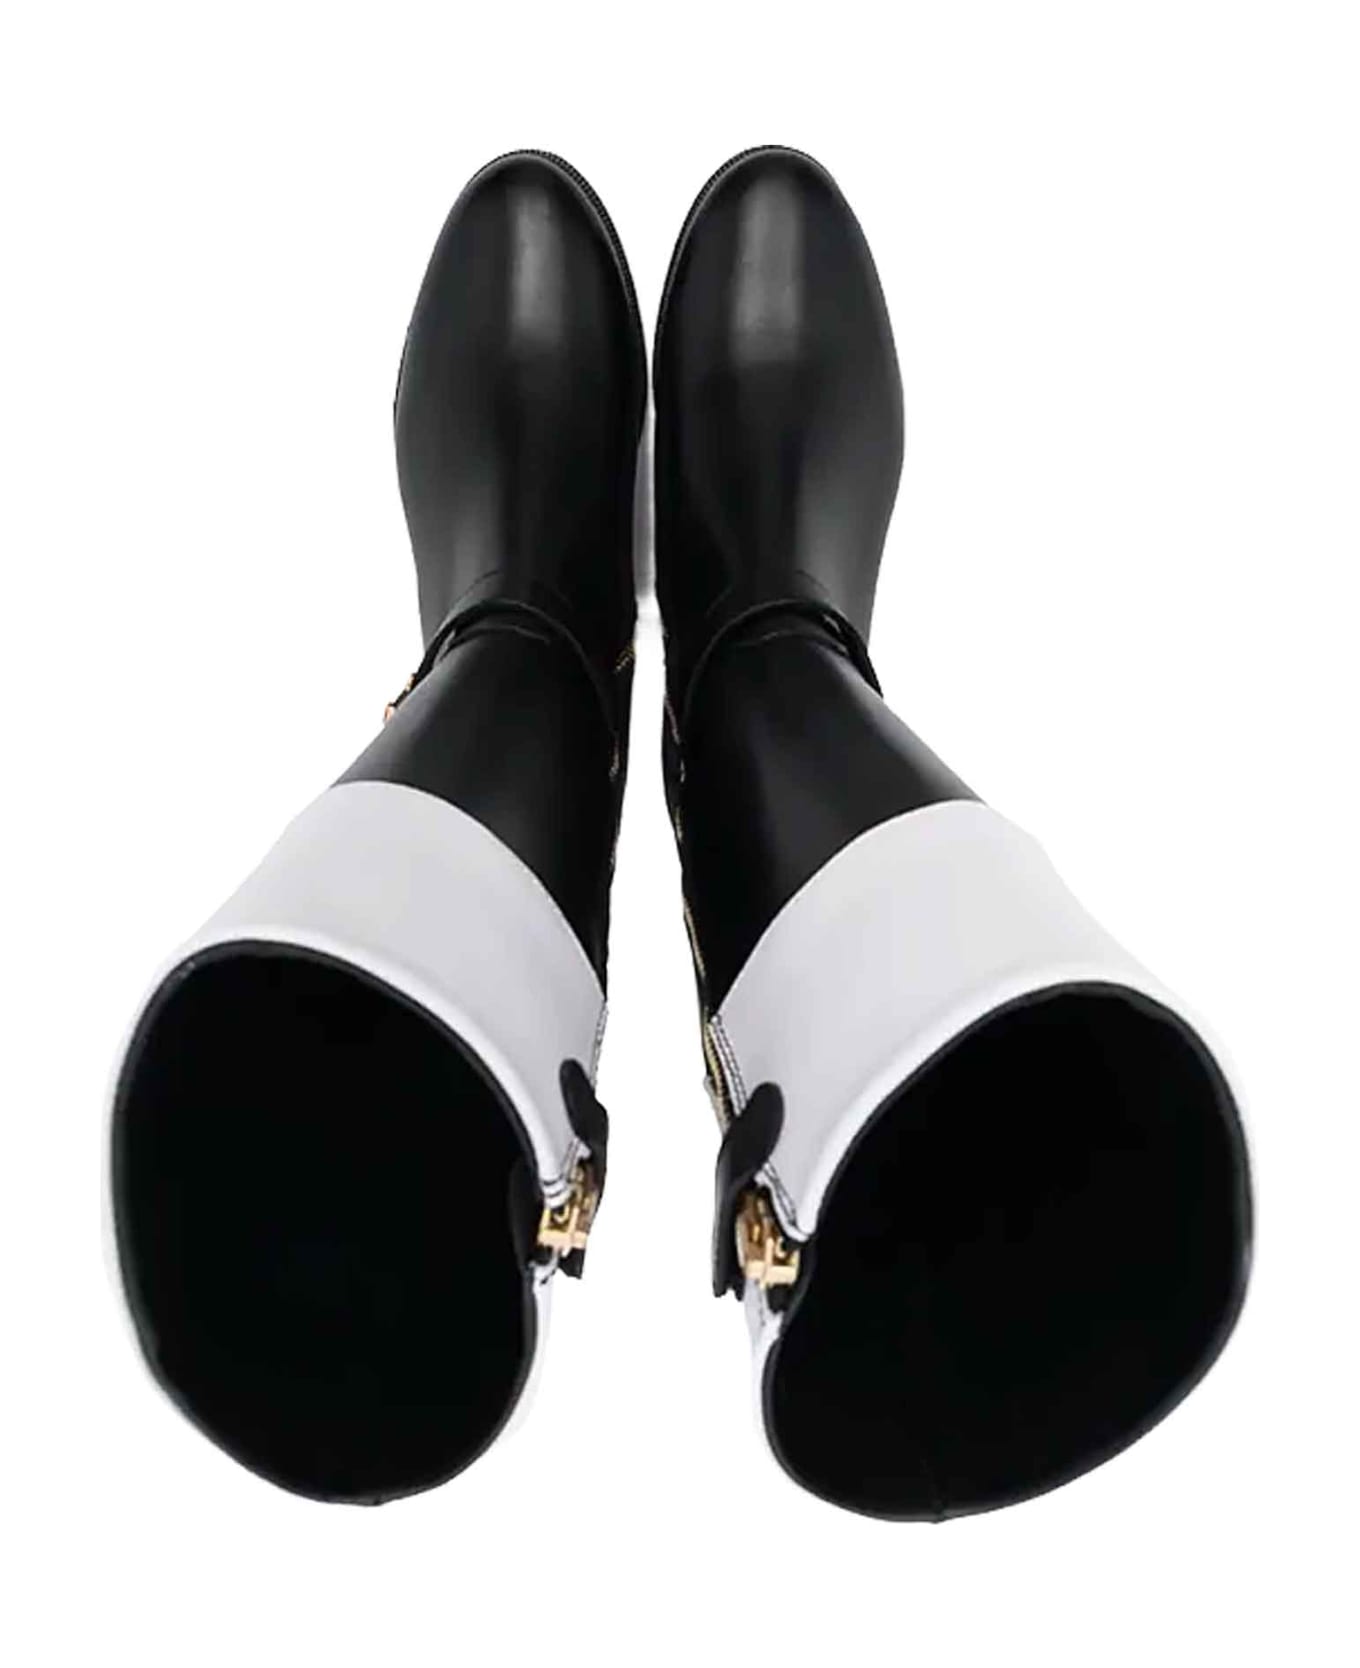 Balmain Black Boots Girl - Nero